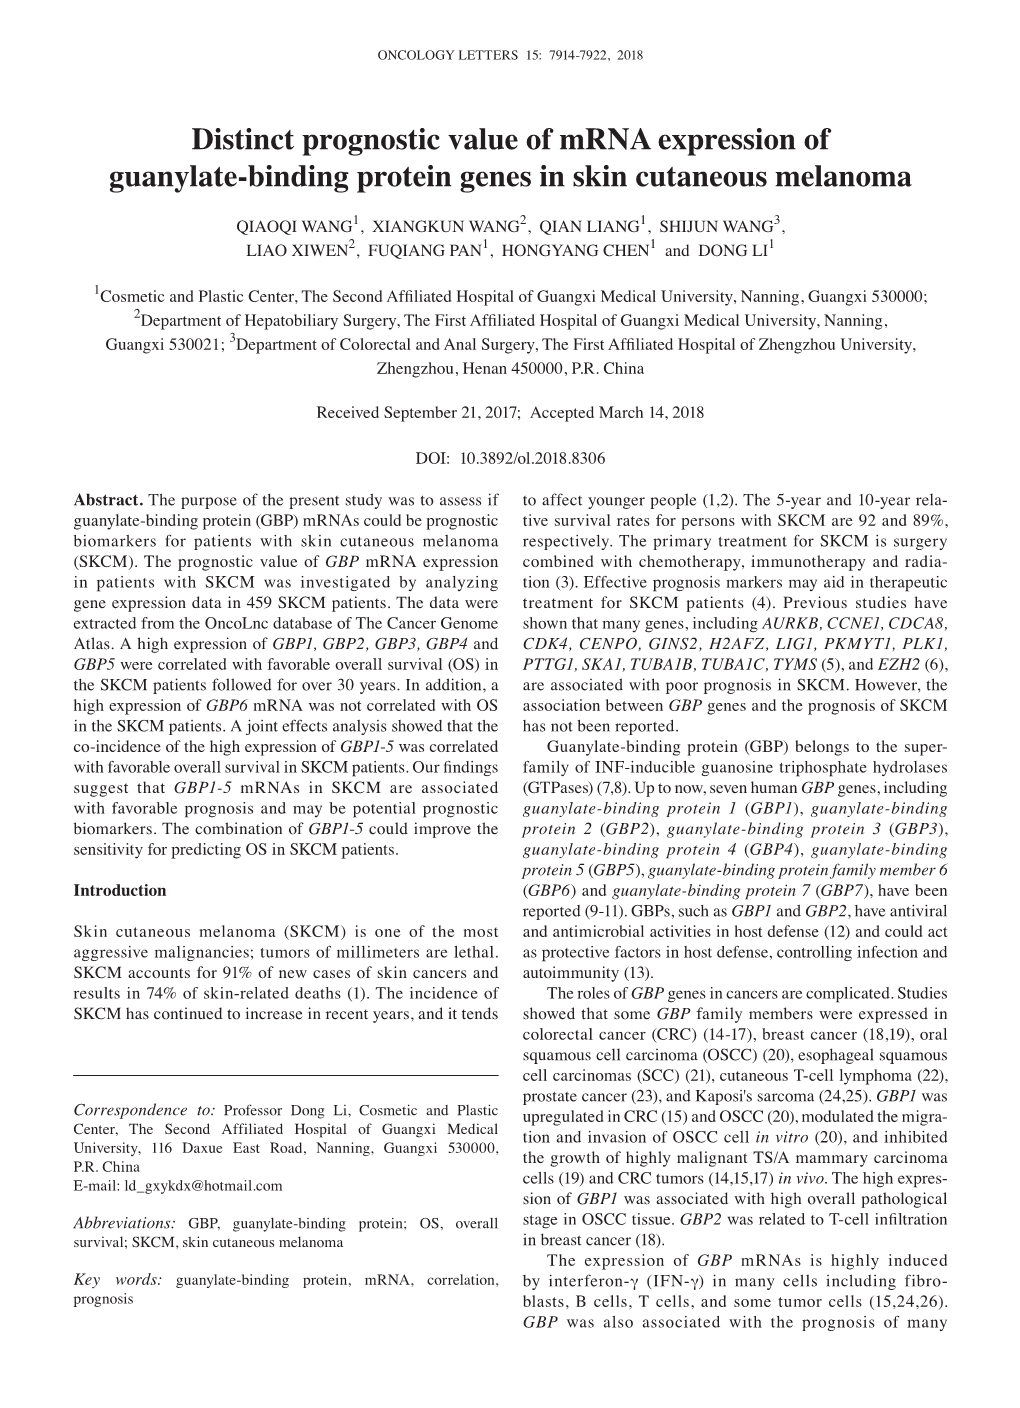 Distinct Prognostic Value of Mrna Expression of Guanylate‑Binding Protein Genes in Skin Cutaneous Melanoma